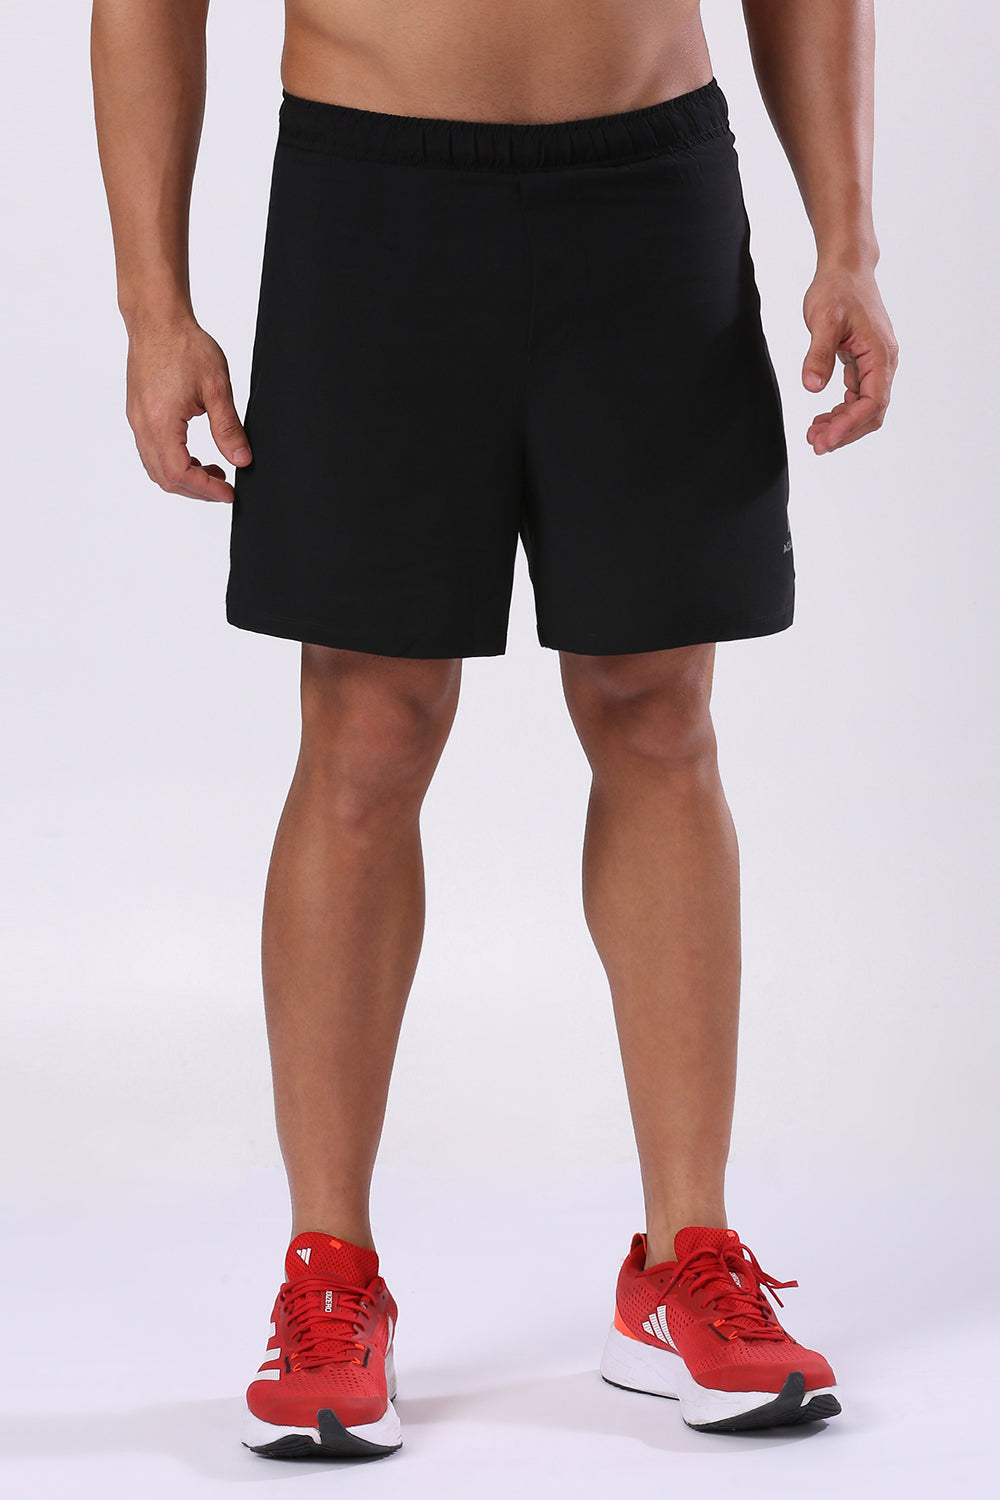 Men's 5" EnduroFlex Running Shorts